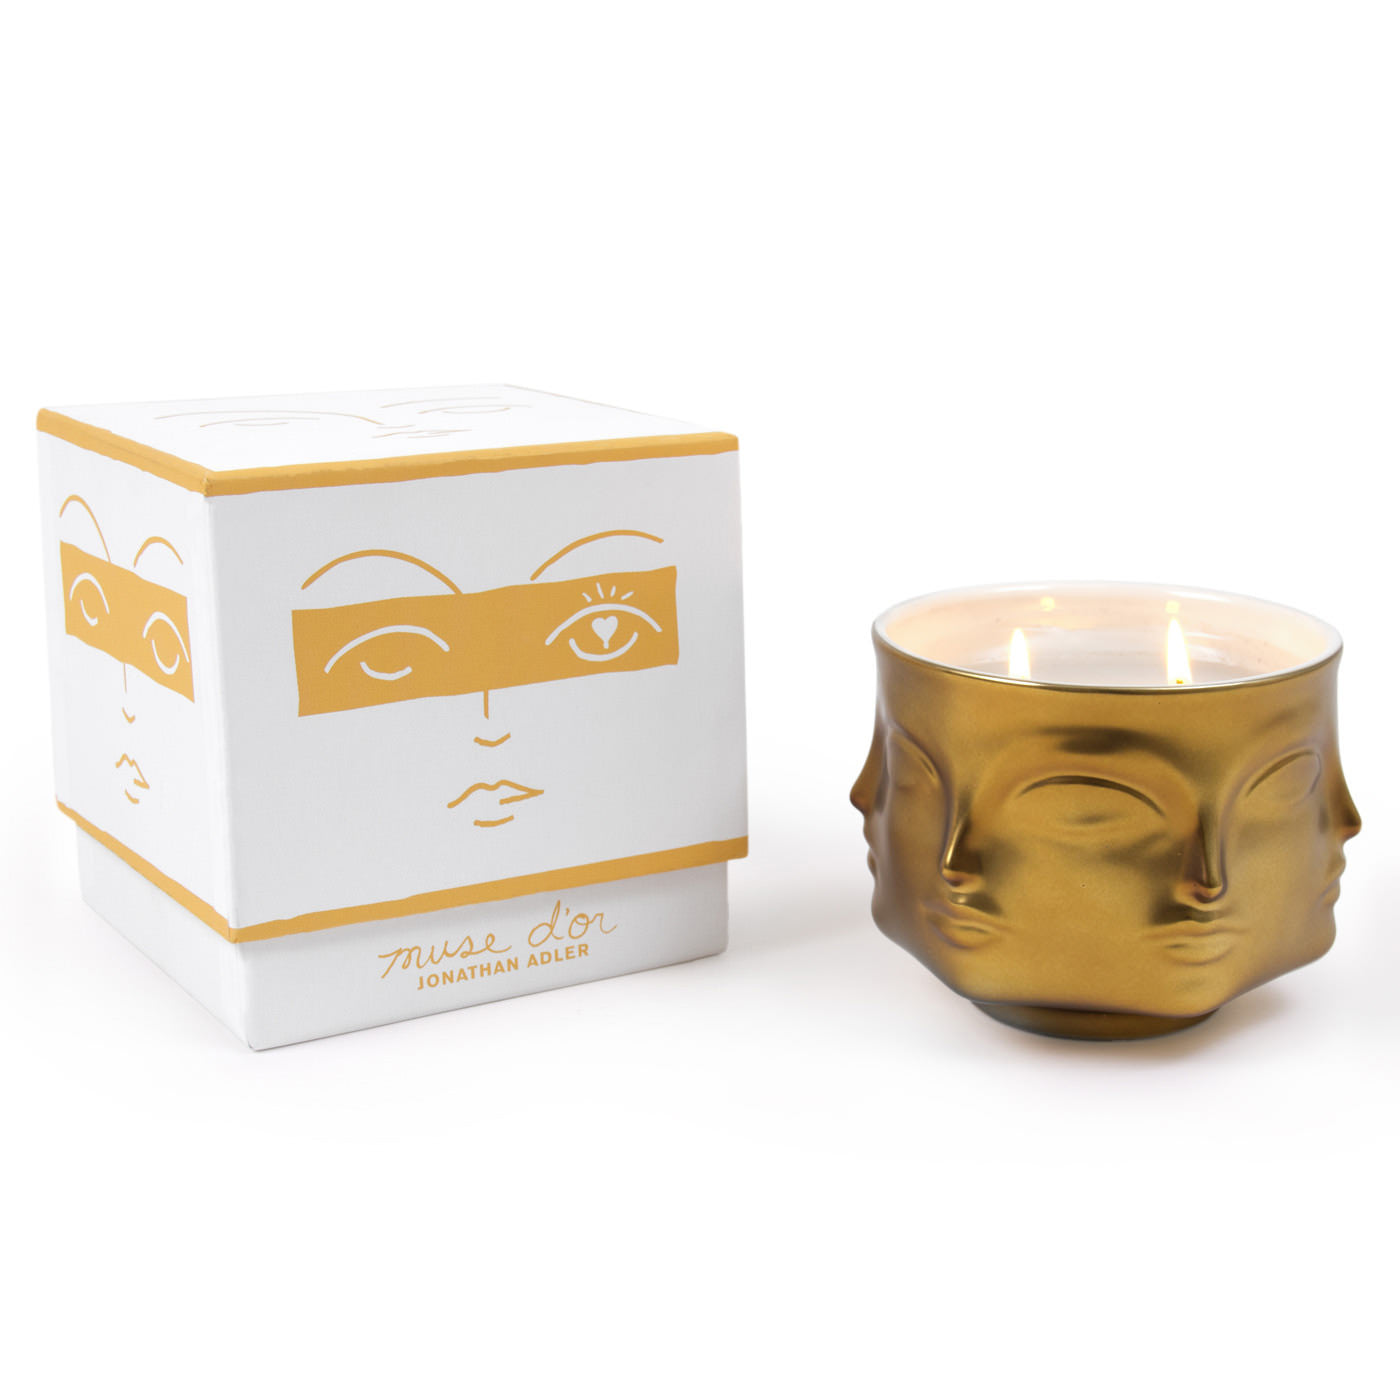 Jonathan Adler Muse d'Or Ceramic Candle, Fragrance - New London Pharmacy